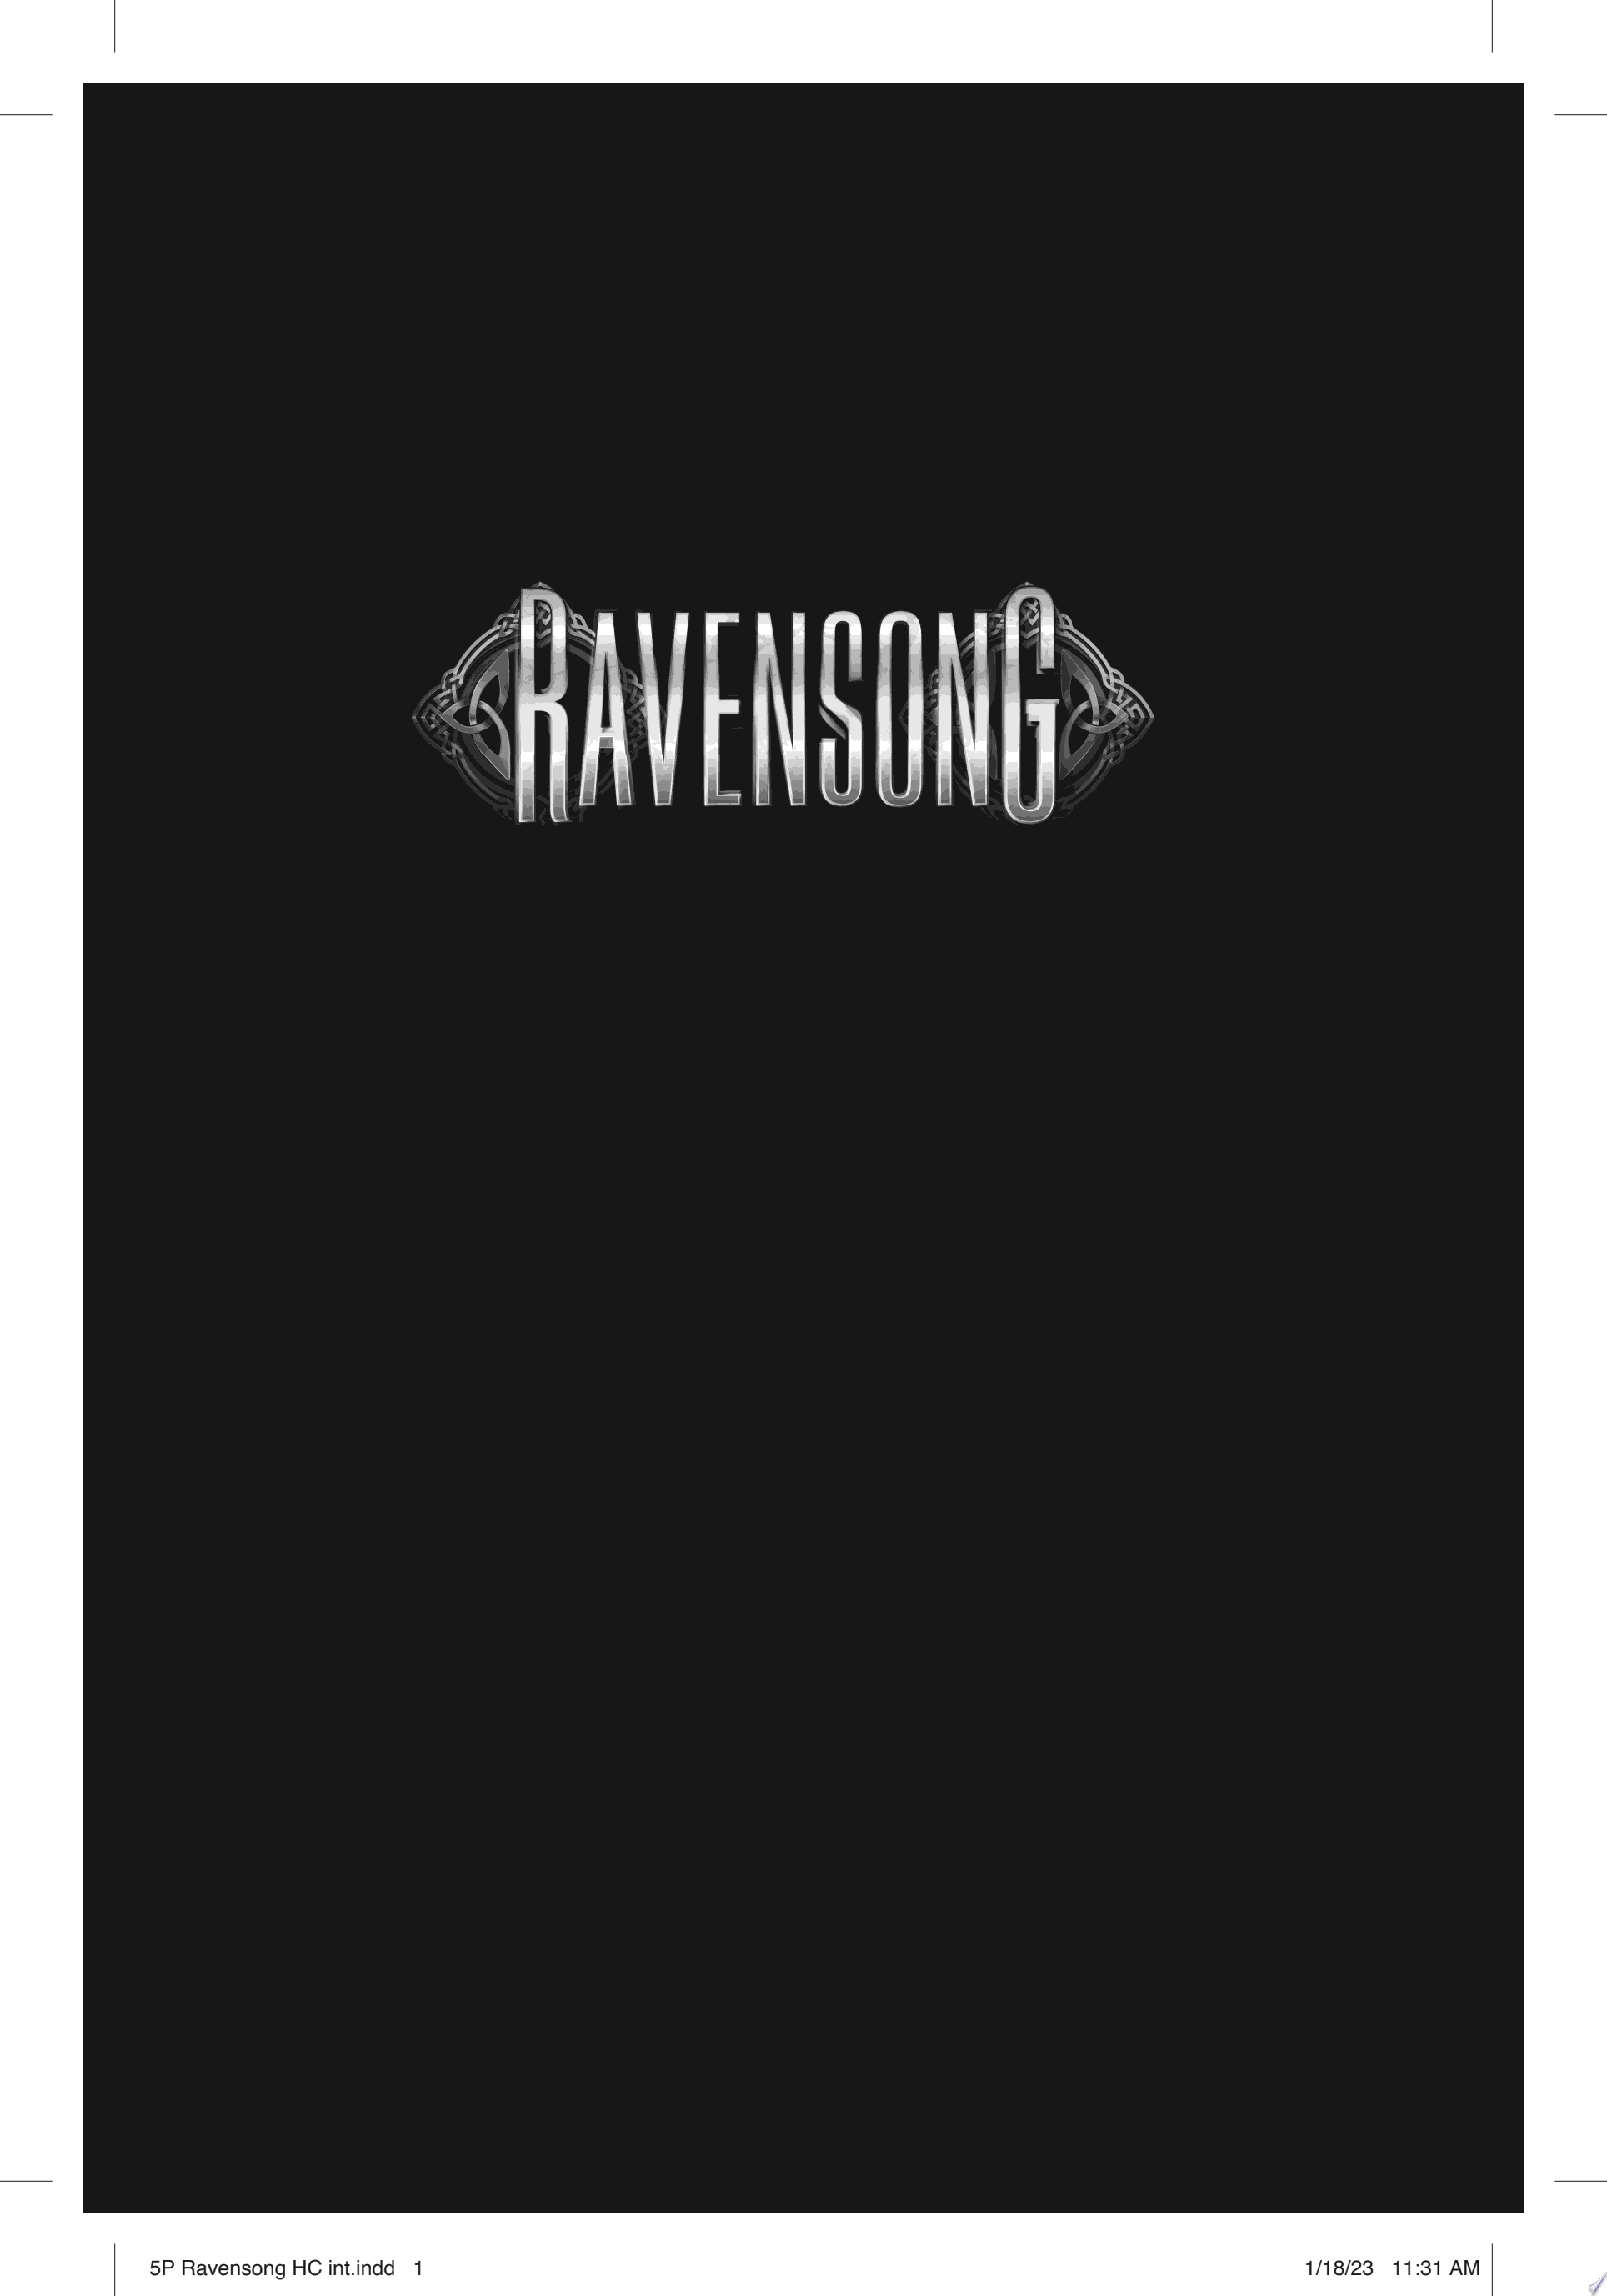 Image for "Ravensong"